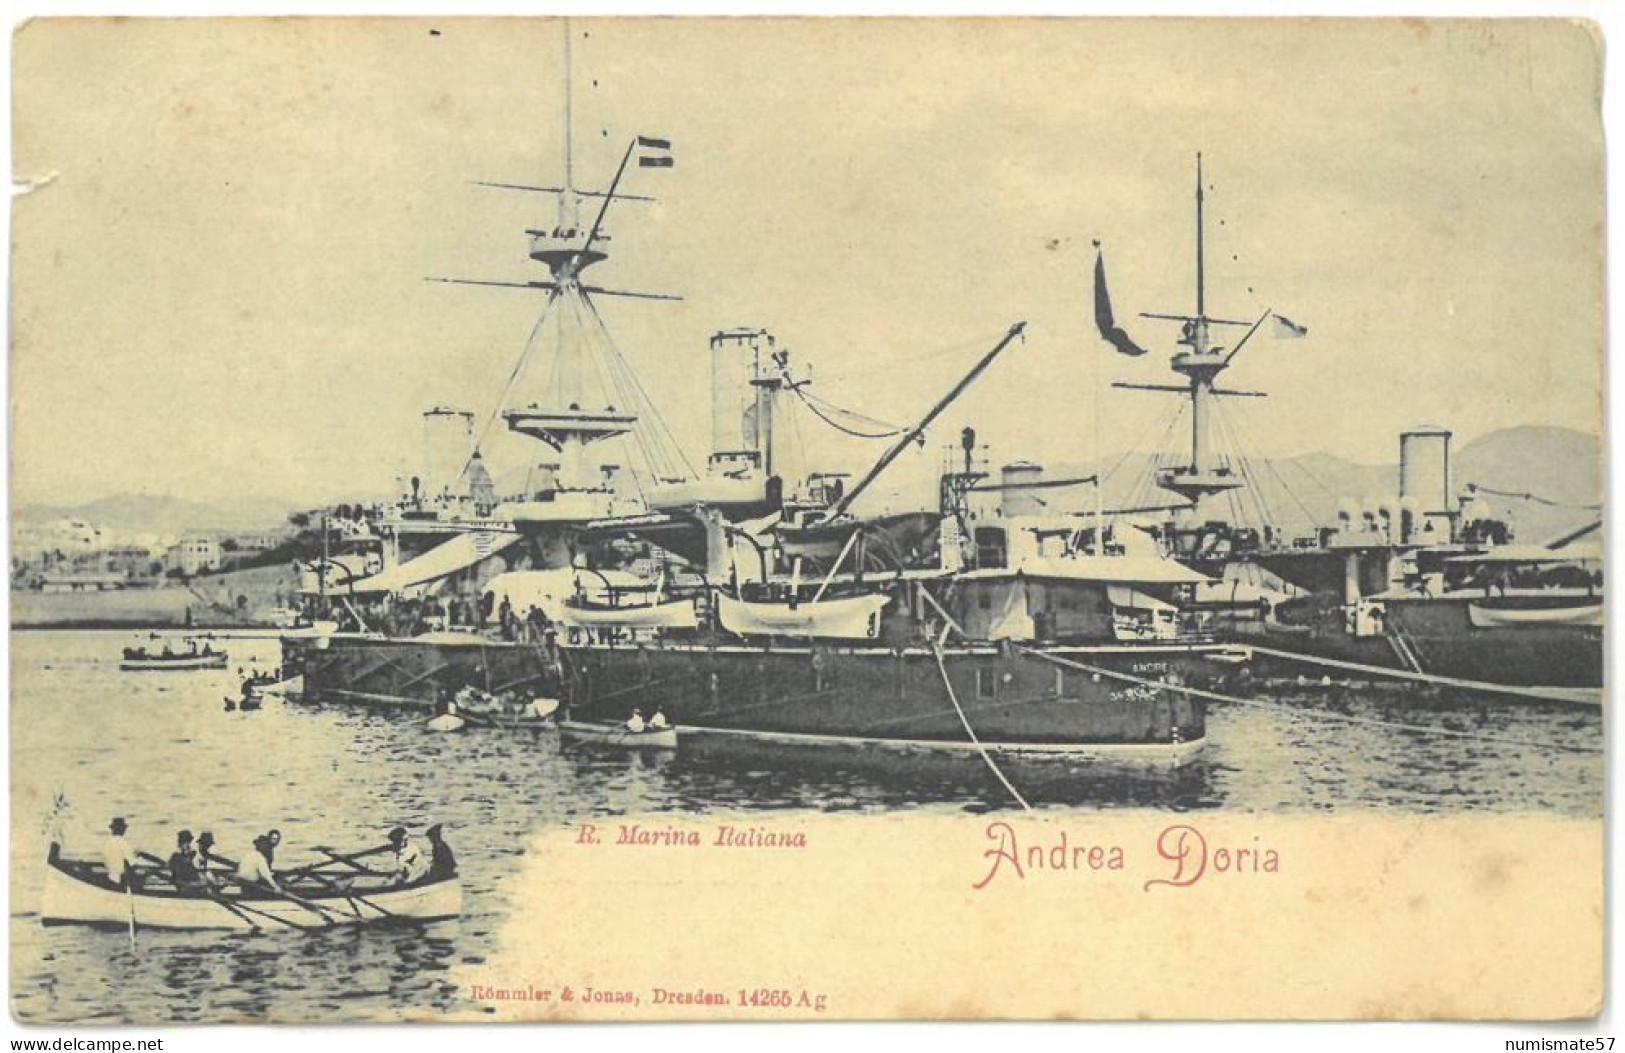 CPA ANDREA DORIA - R. Marina Italiana - Ed. Römmler & Jonas , Dresden N°14265 Ag - Oorlog